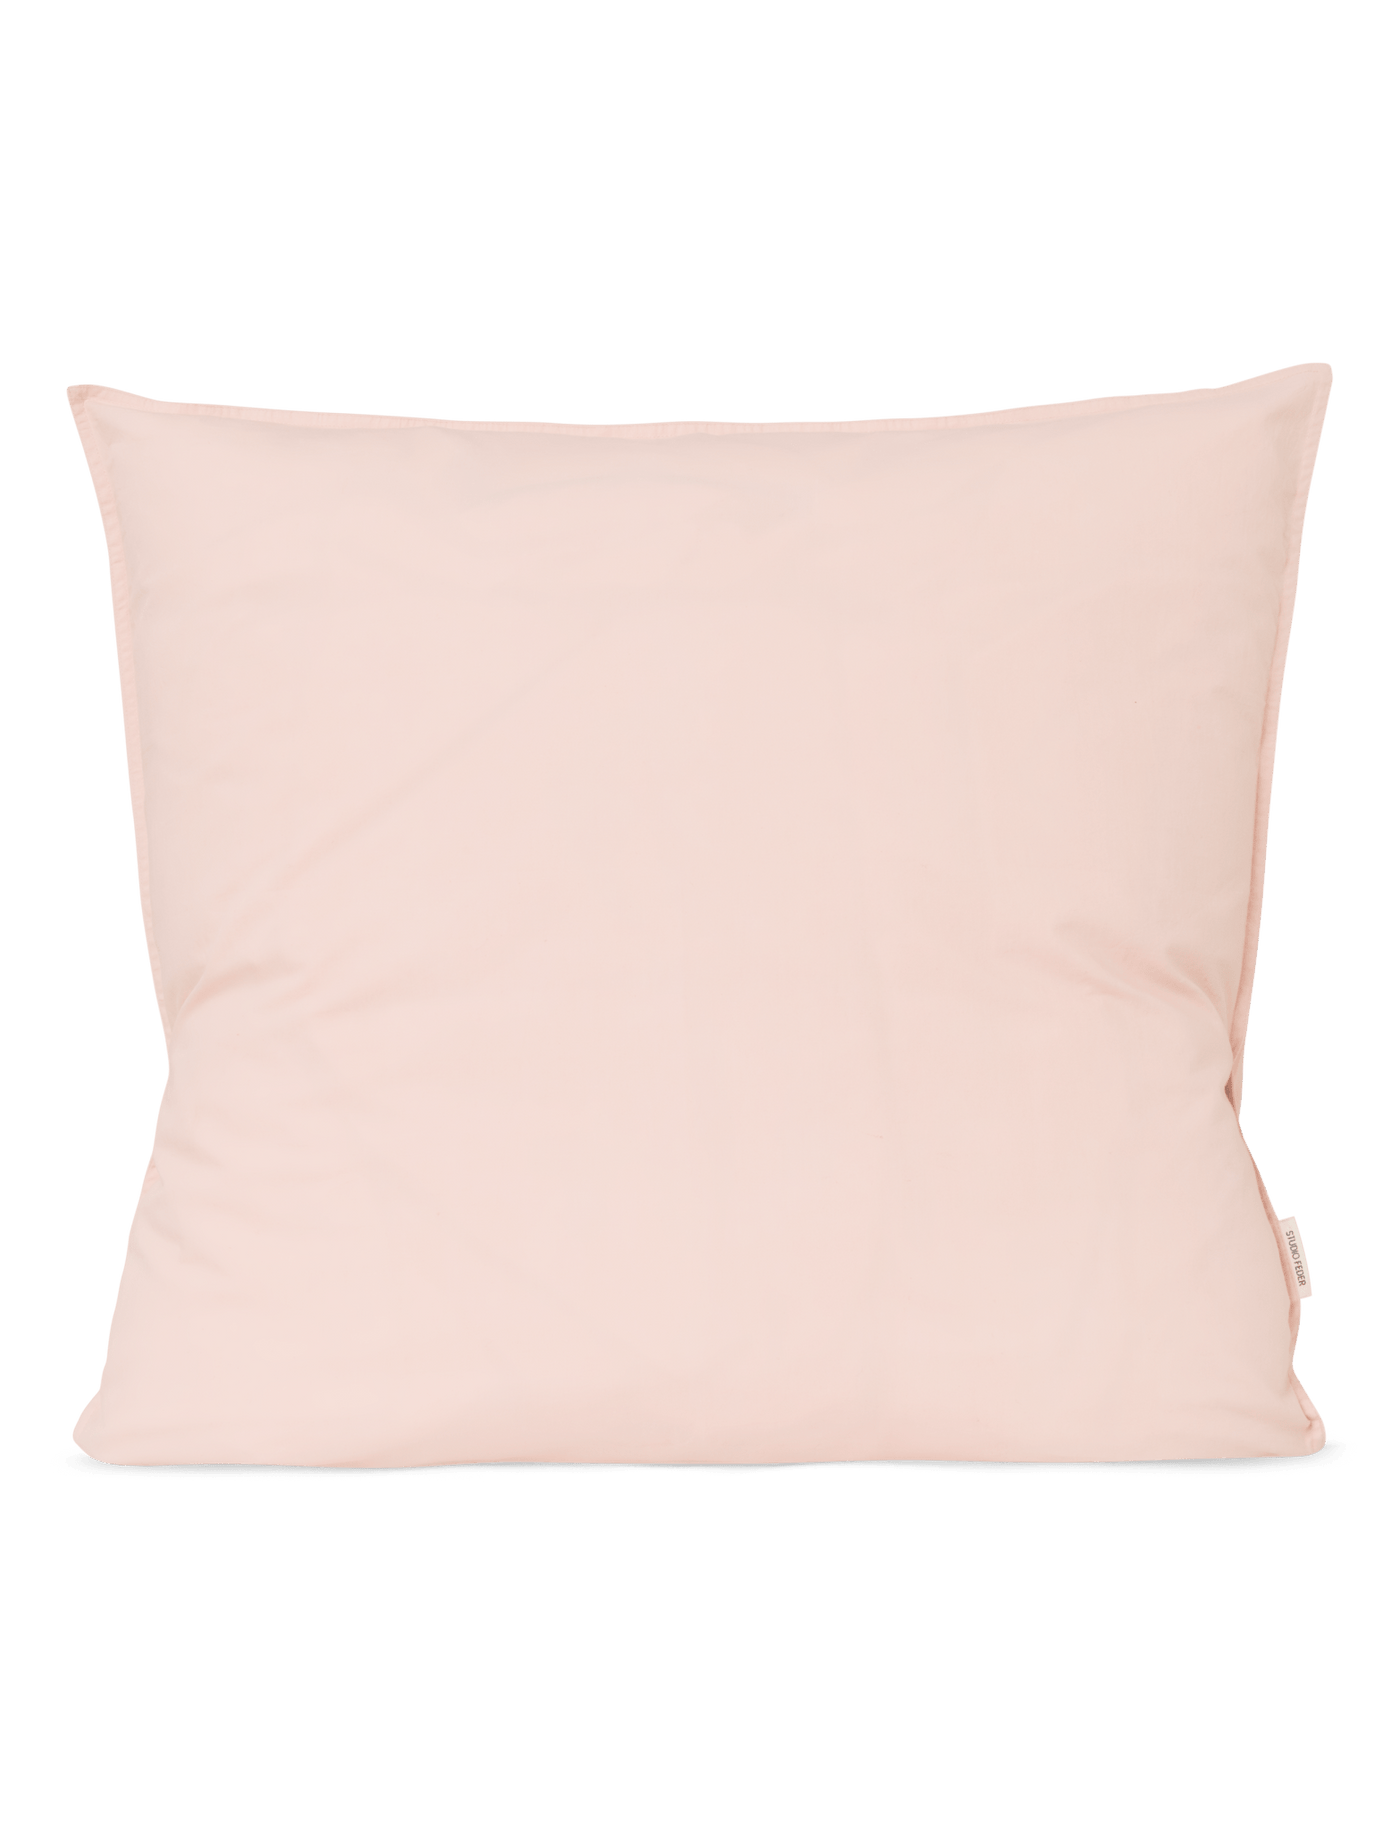 Pillow case - PINK TINT